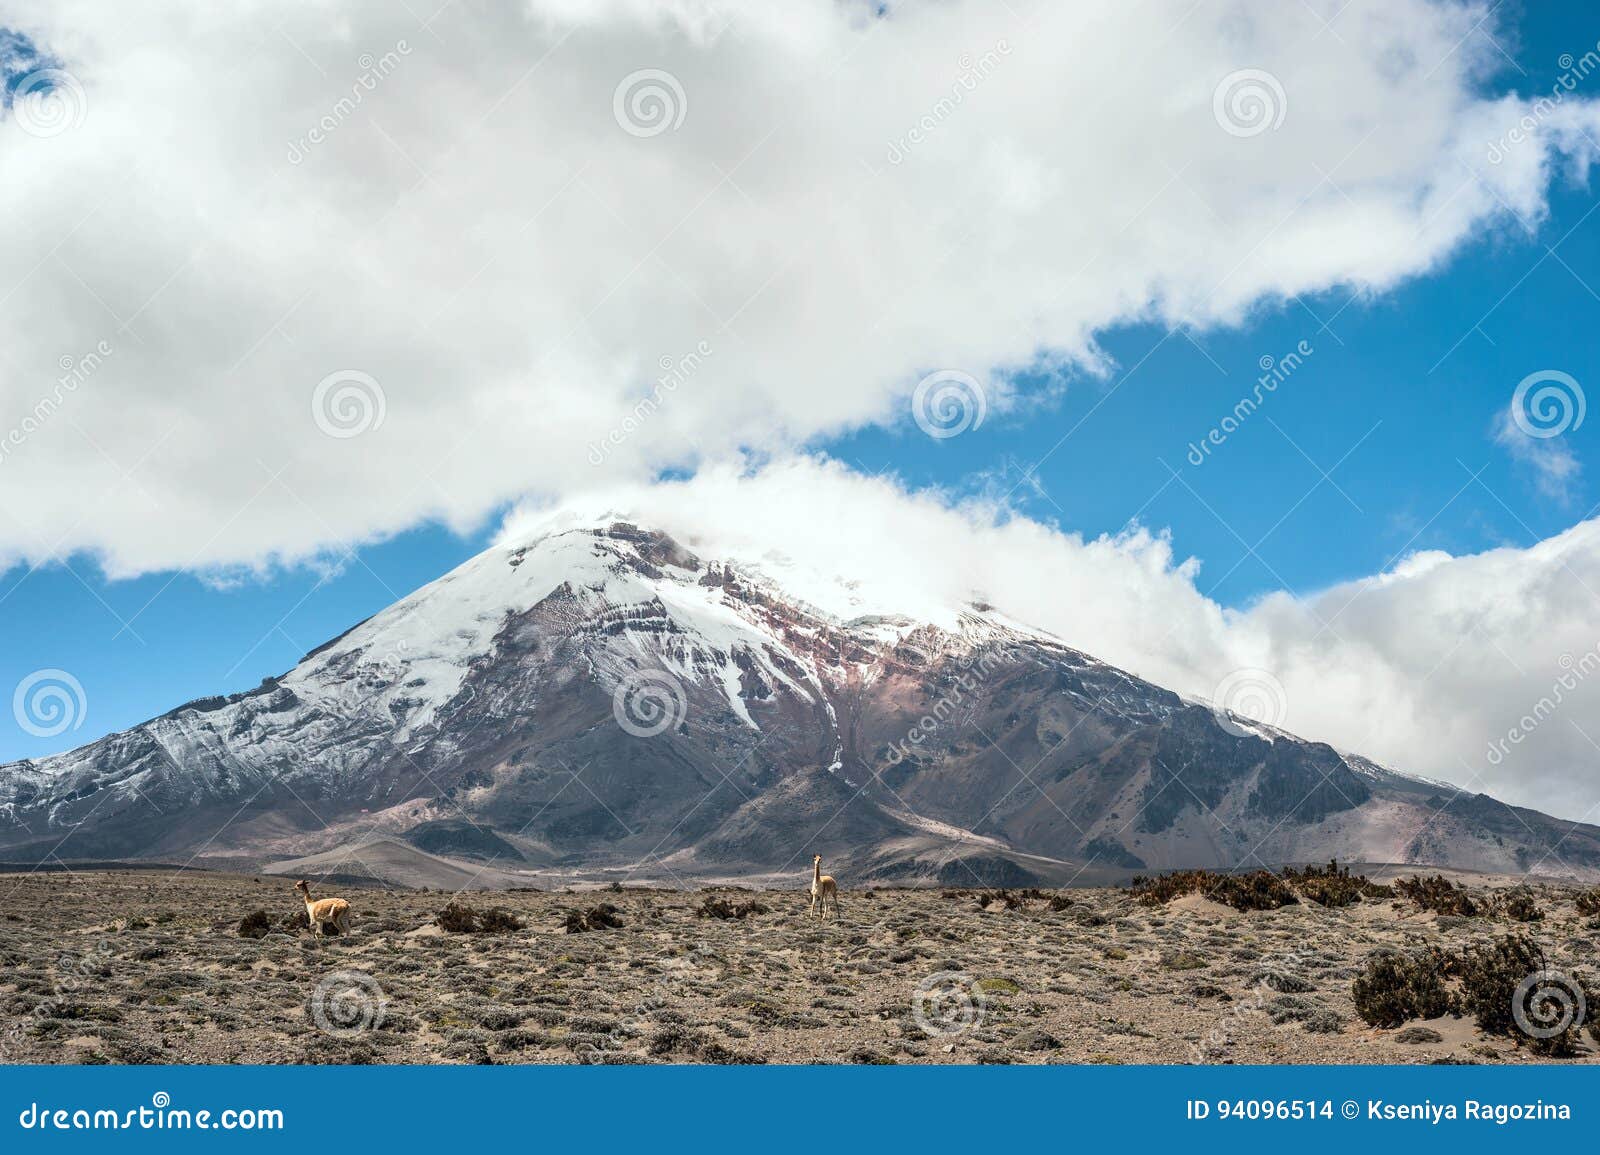 vicugnas near stratovolcano chimborazo